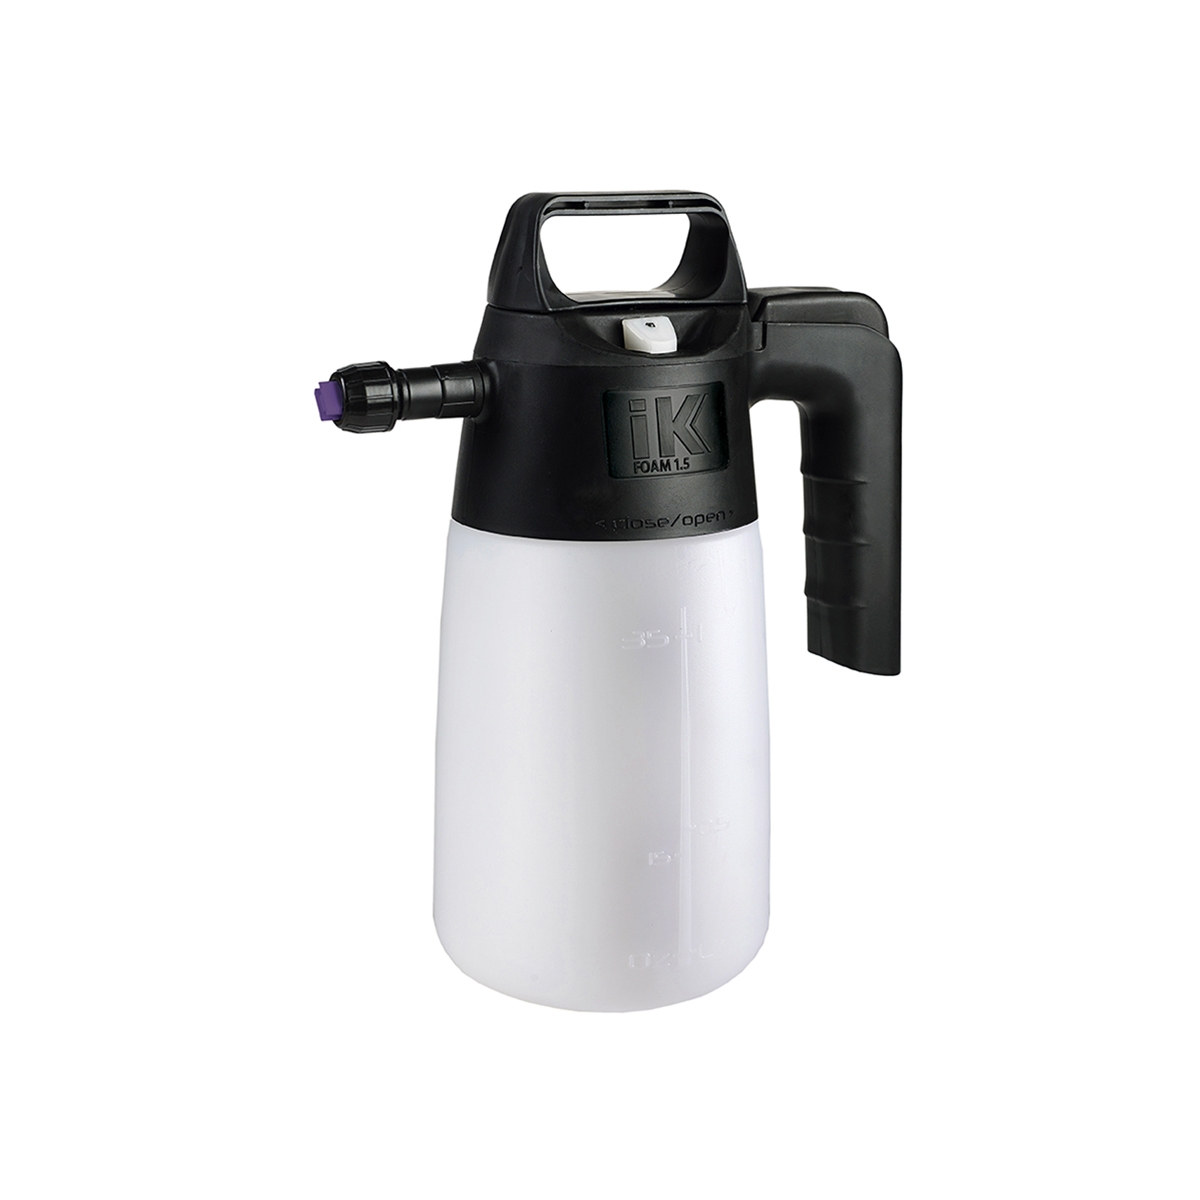 IK Foam 1.5 Professional Sprayer - 35 oz.